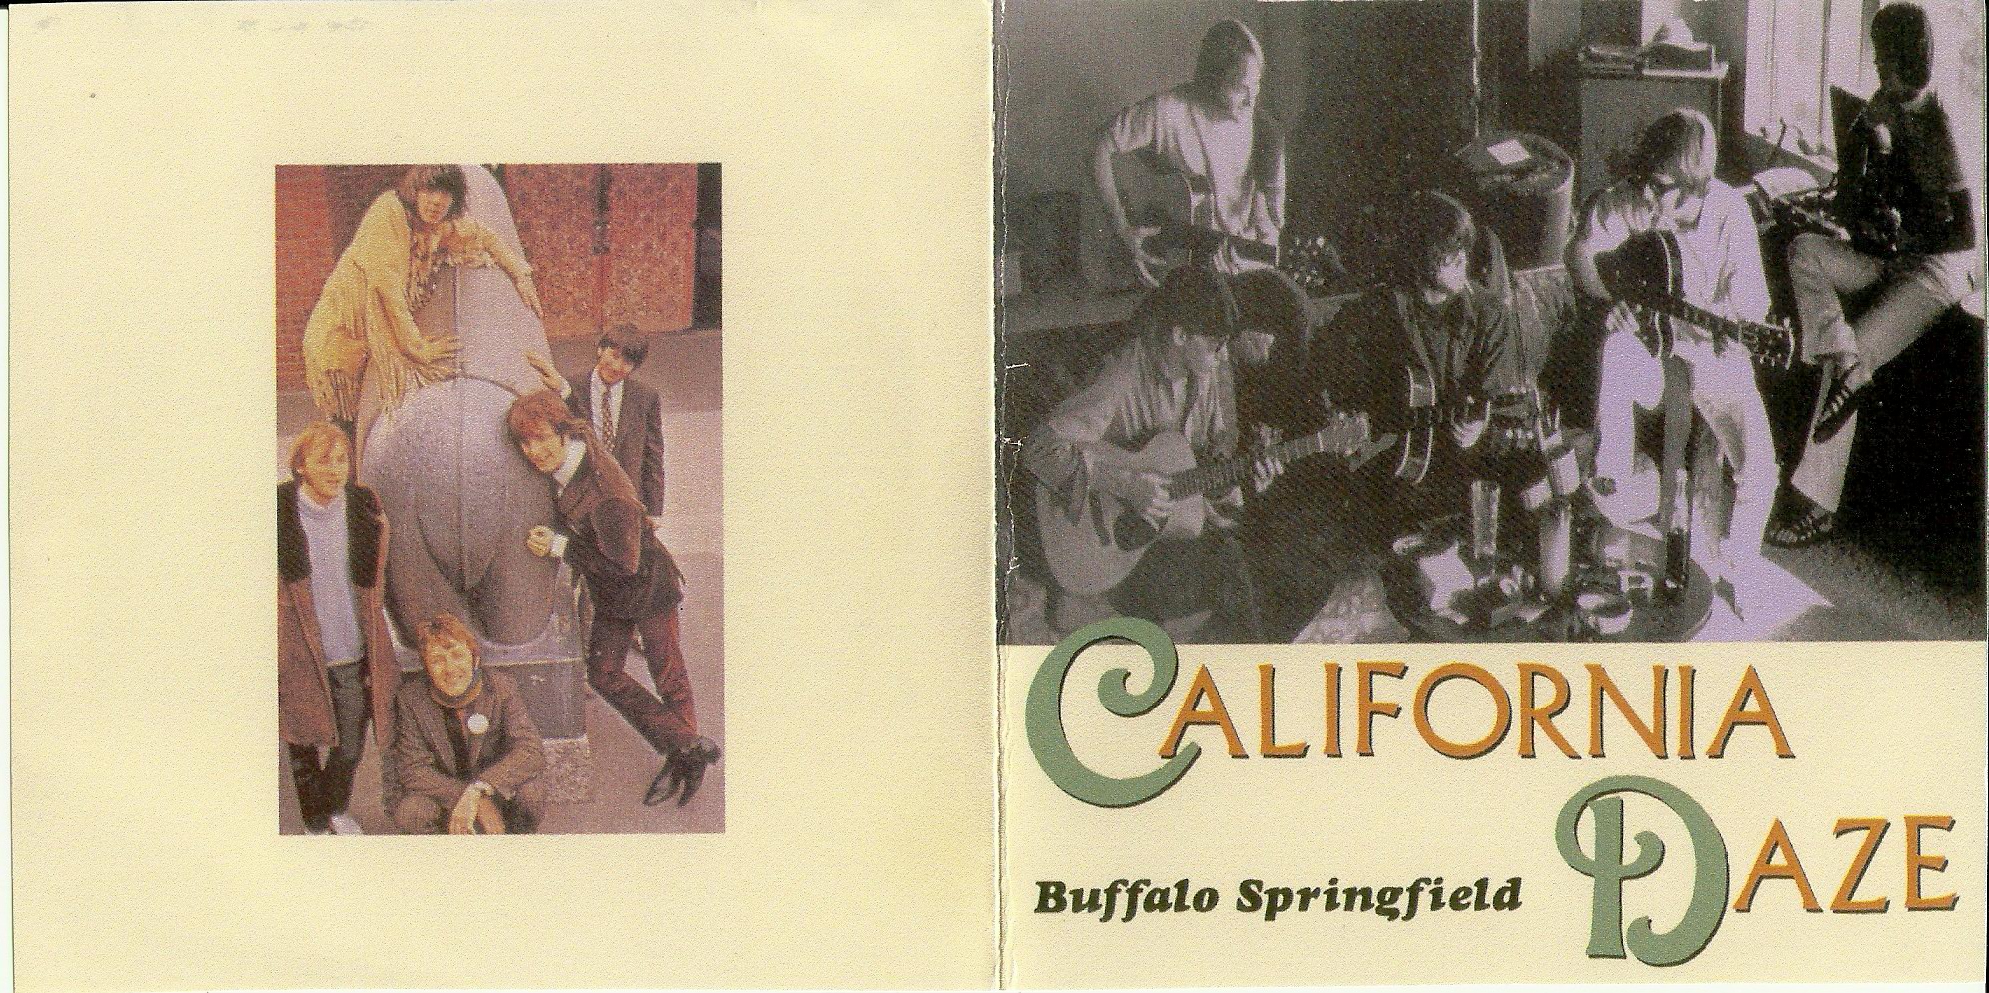 BuffaloSpringfield1967CaliforniaDazeBootlegCD (2).jpg